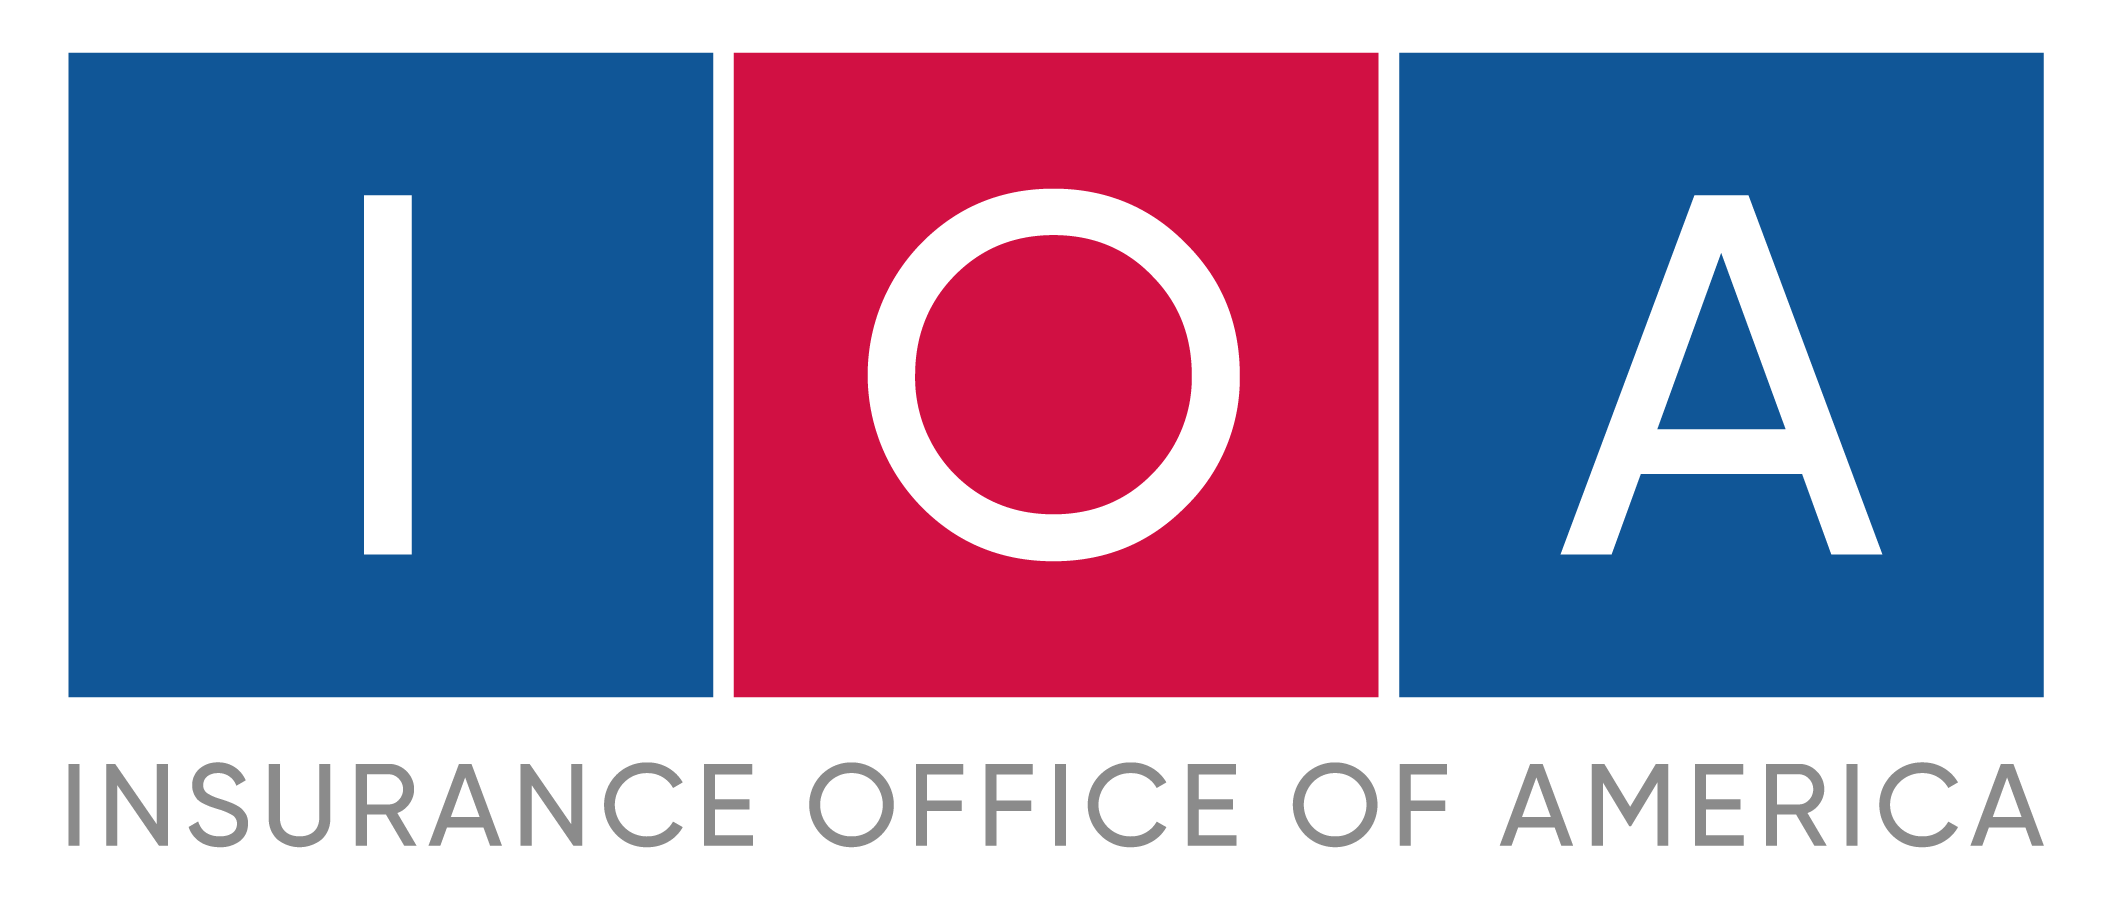 Insurance Office Of America logo